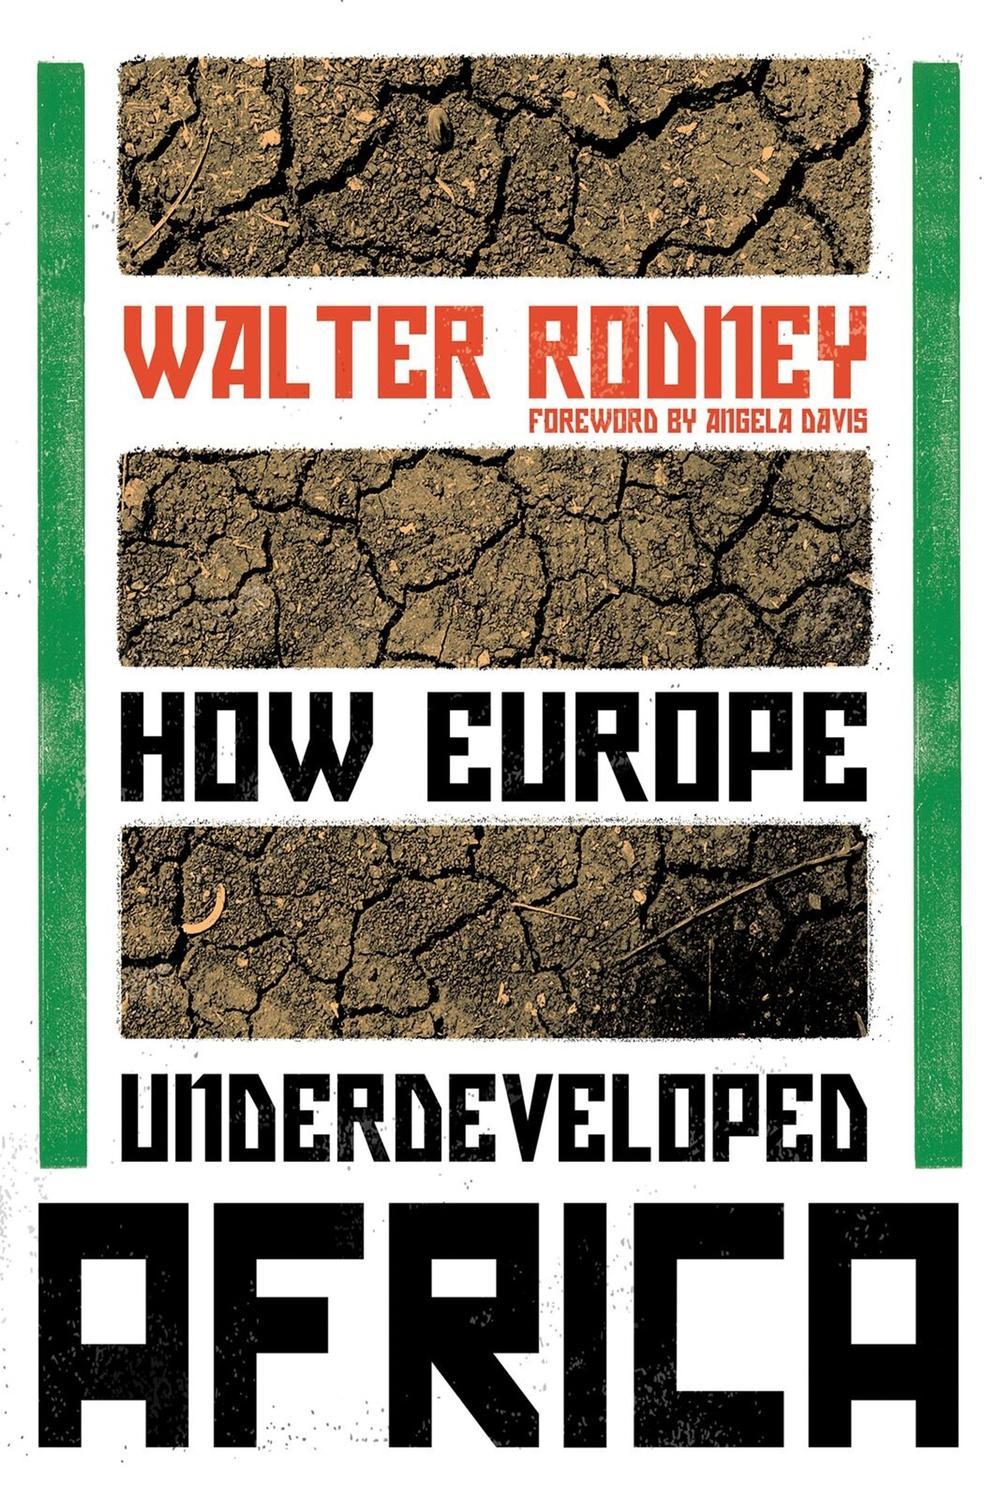 How Europe Underdeveloped Africa - Walter Rodney